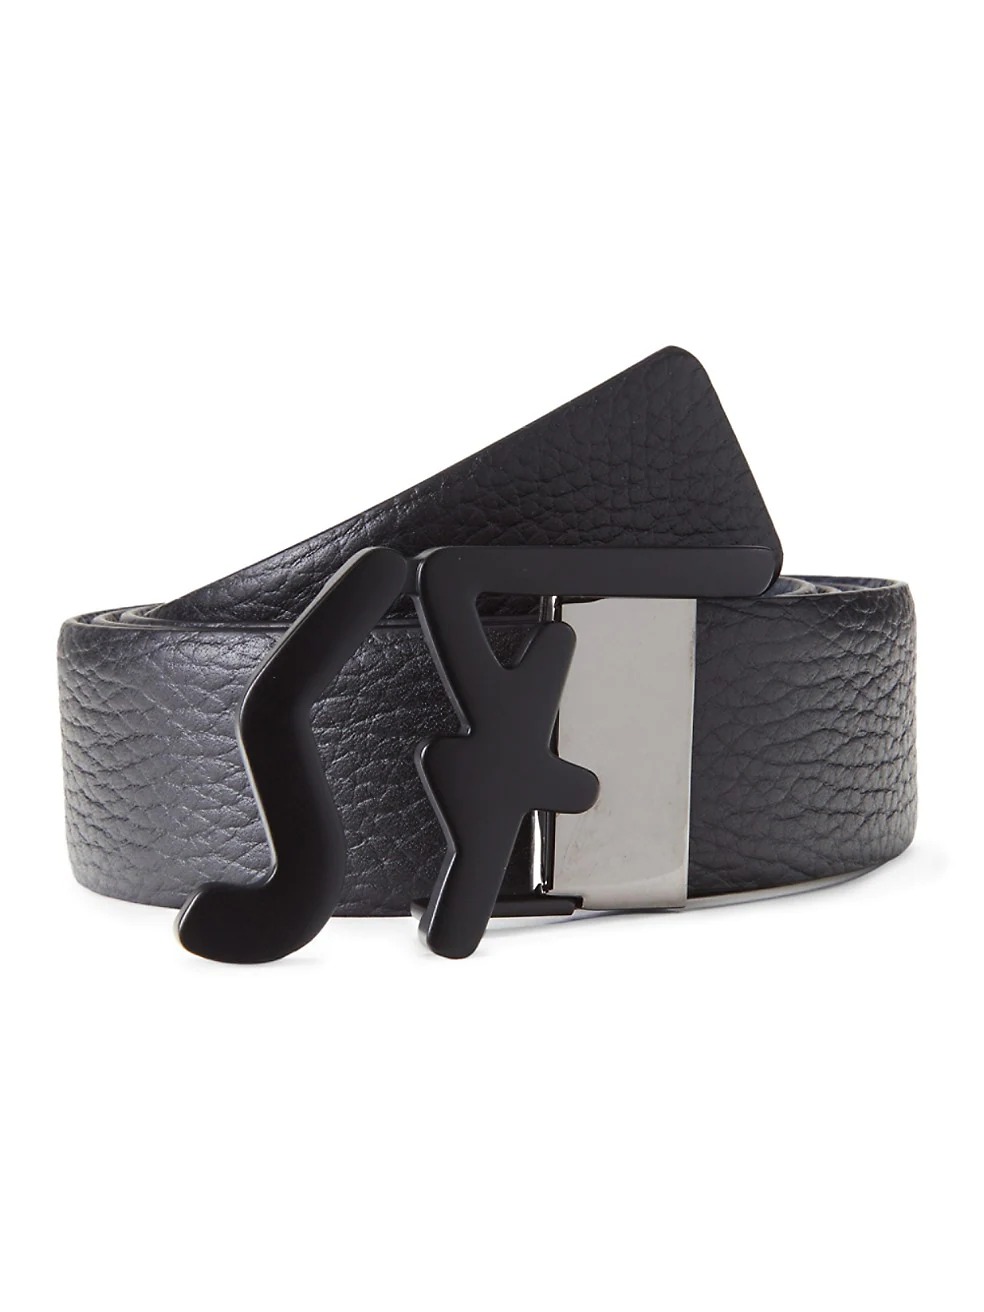 Sale on Salvatore Ferragamo Monogram Leather Belt